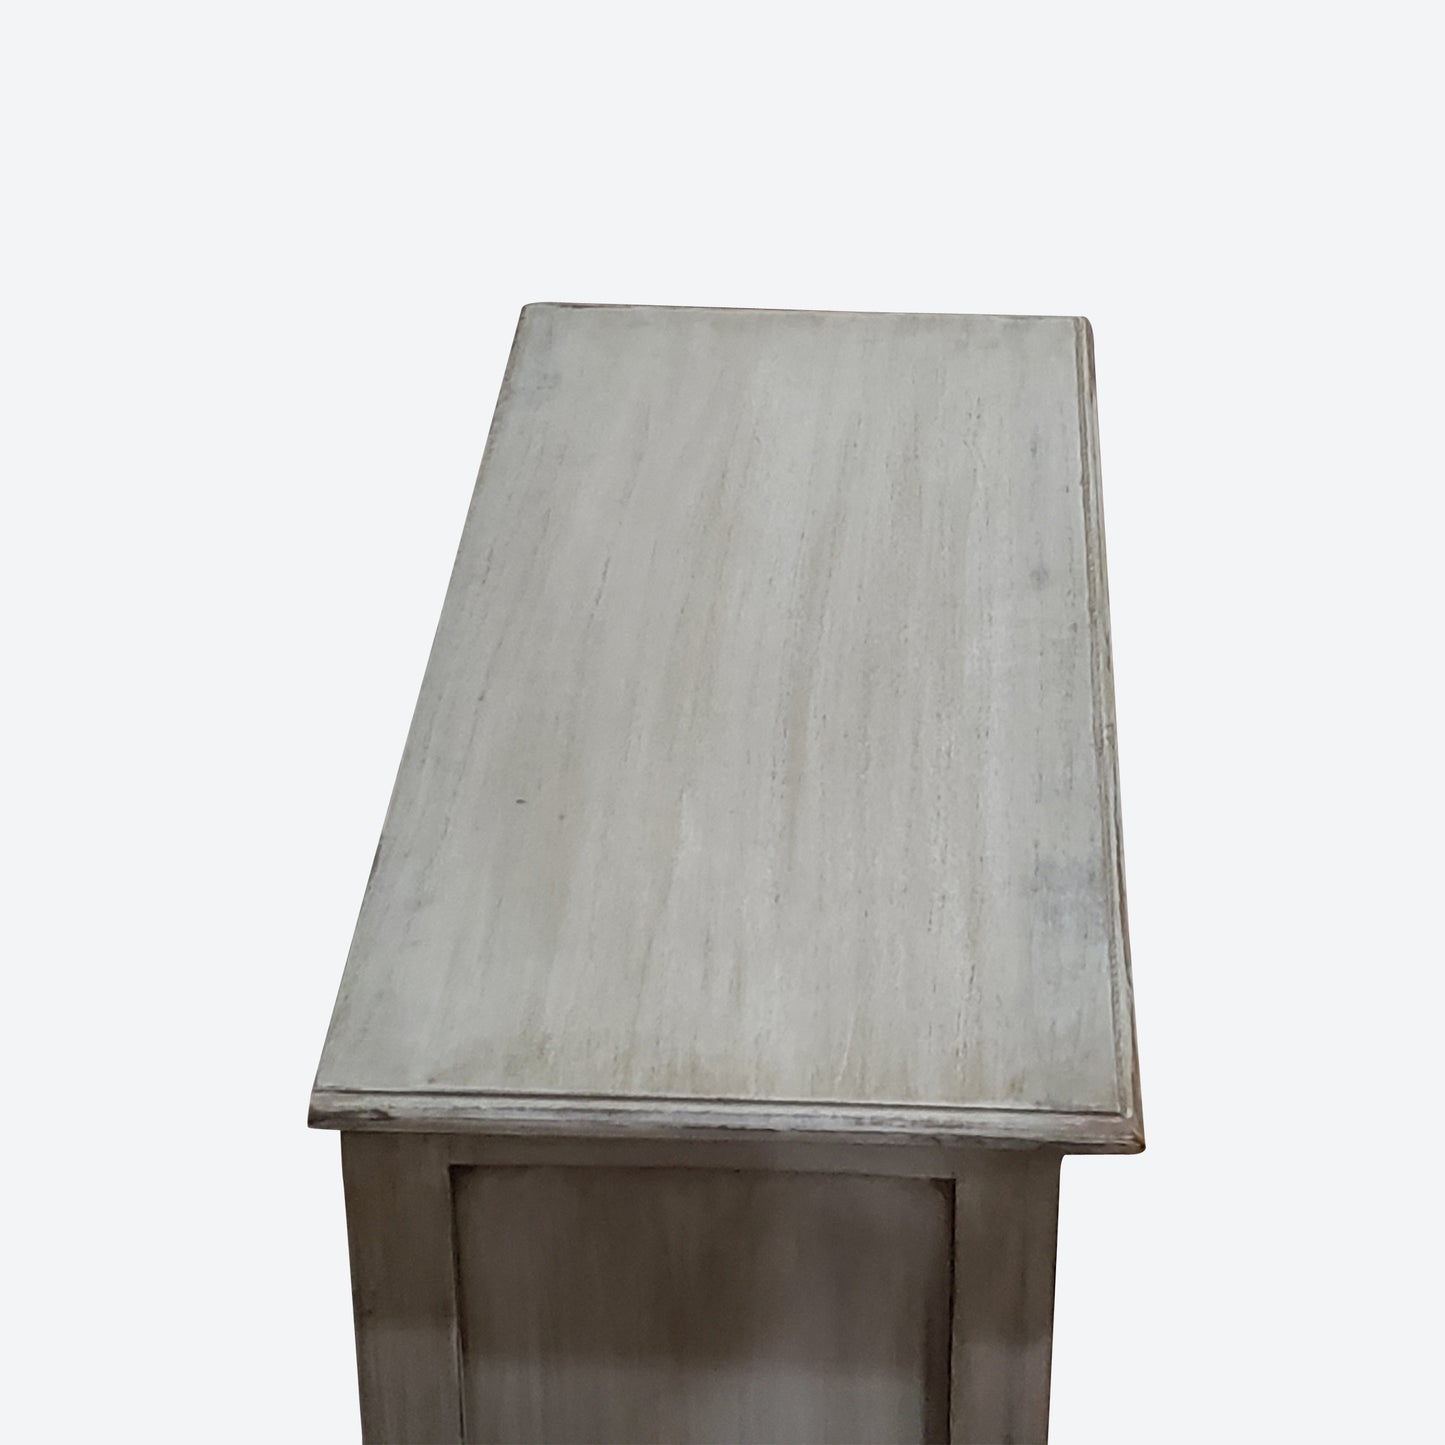 Light GRAY CEDAR WOOD CENTER CONSOLE TABLE WITH HANDCARVED MANDALA -SK- SKU 1064